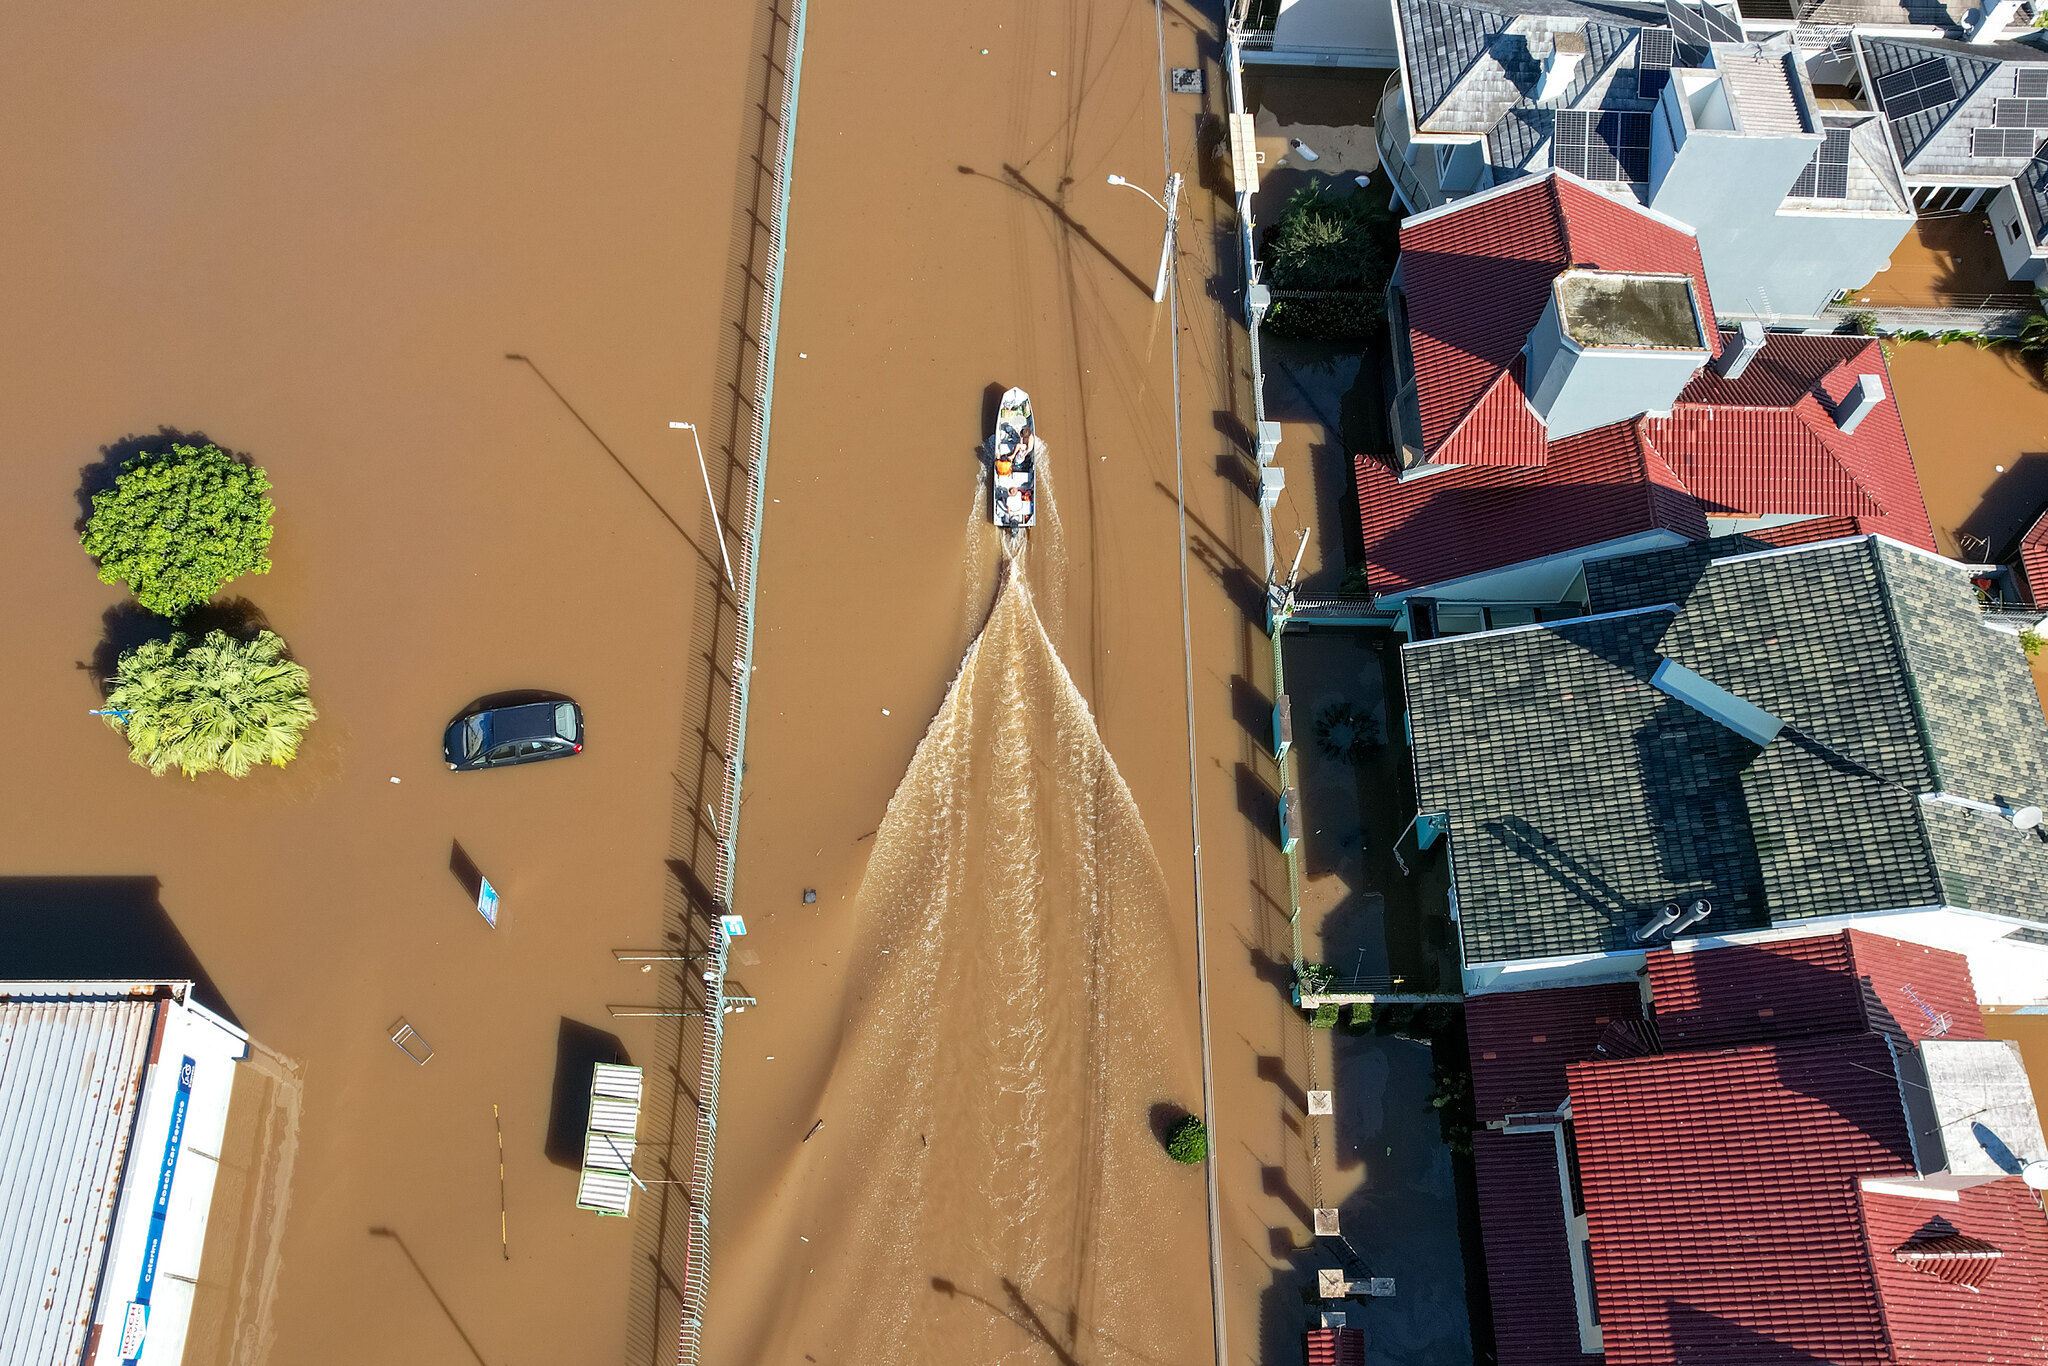 Imagens exclusivas da enchente no Rio Grande do Sul